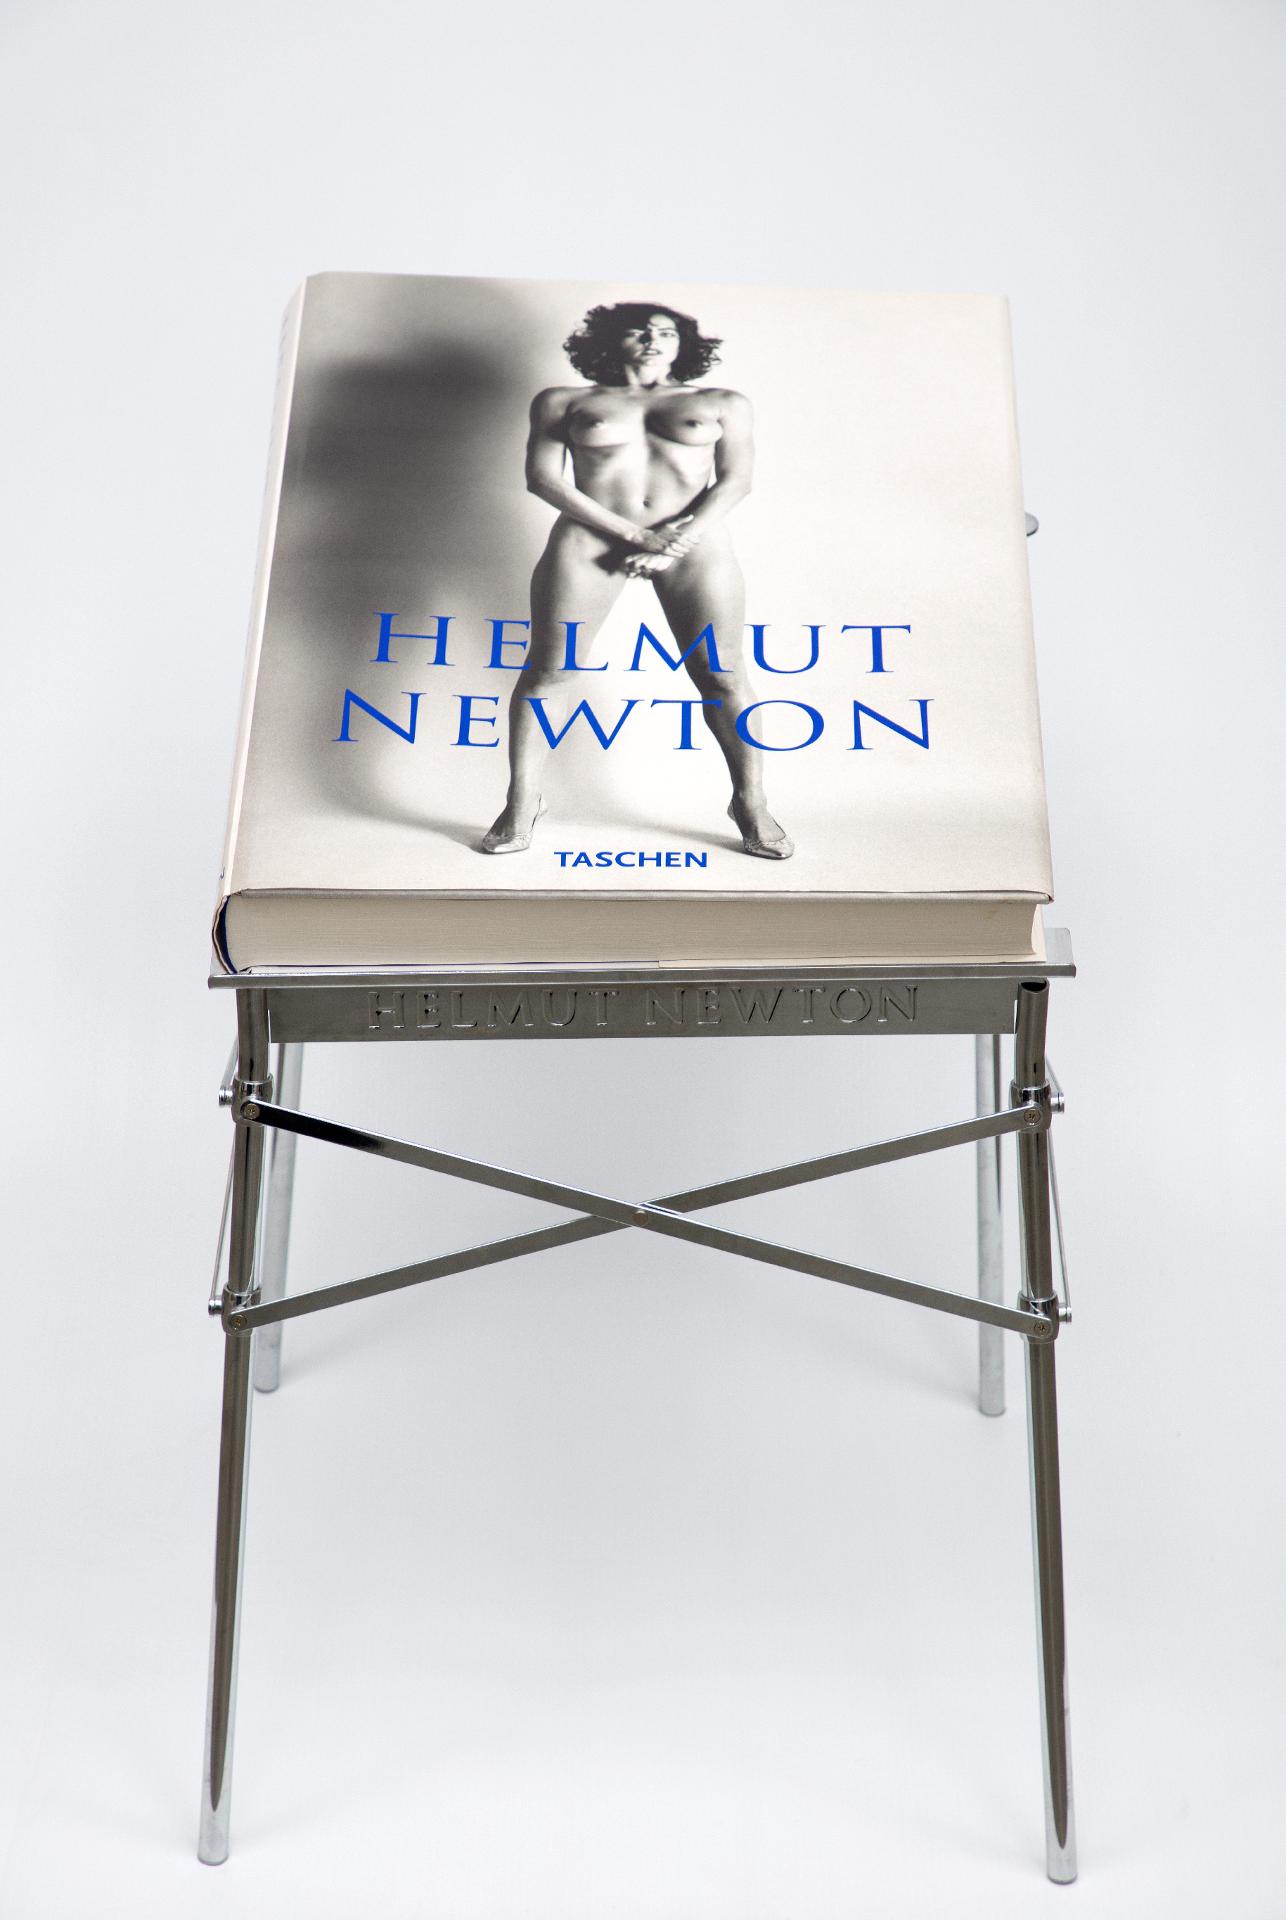 Helmut Newton - Sumo, Monte Carlo, Taschen, 1999 (Première édition / First edition)